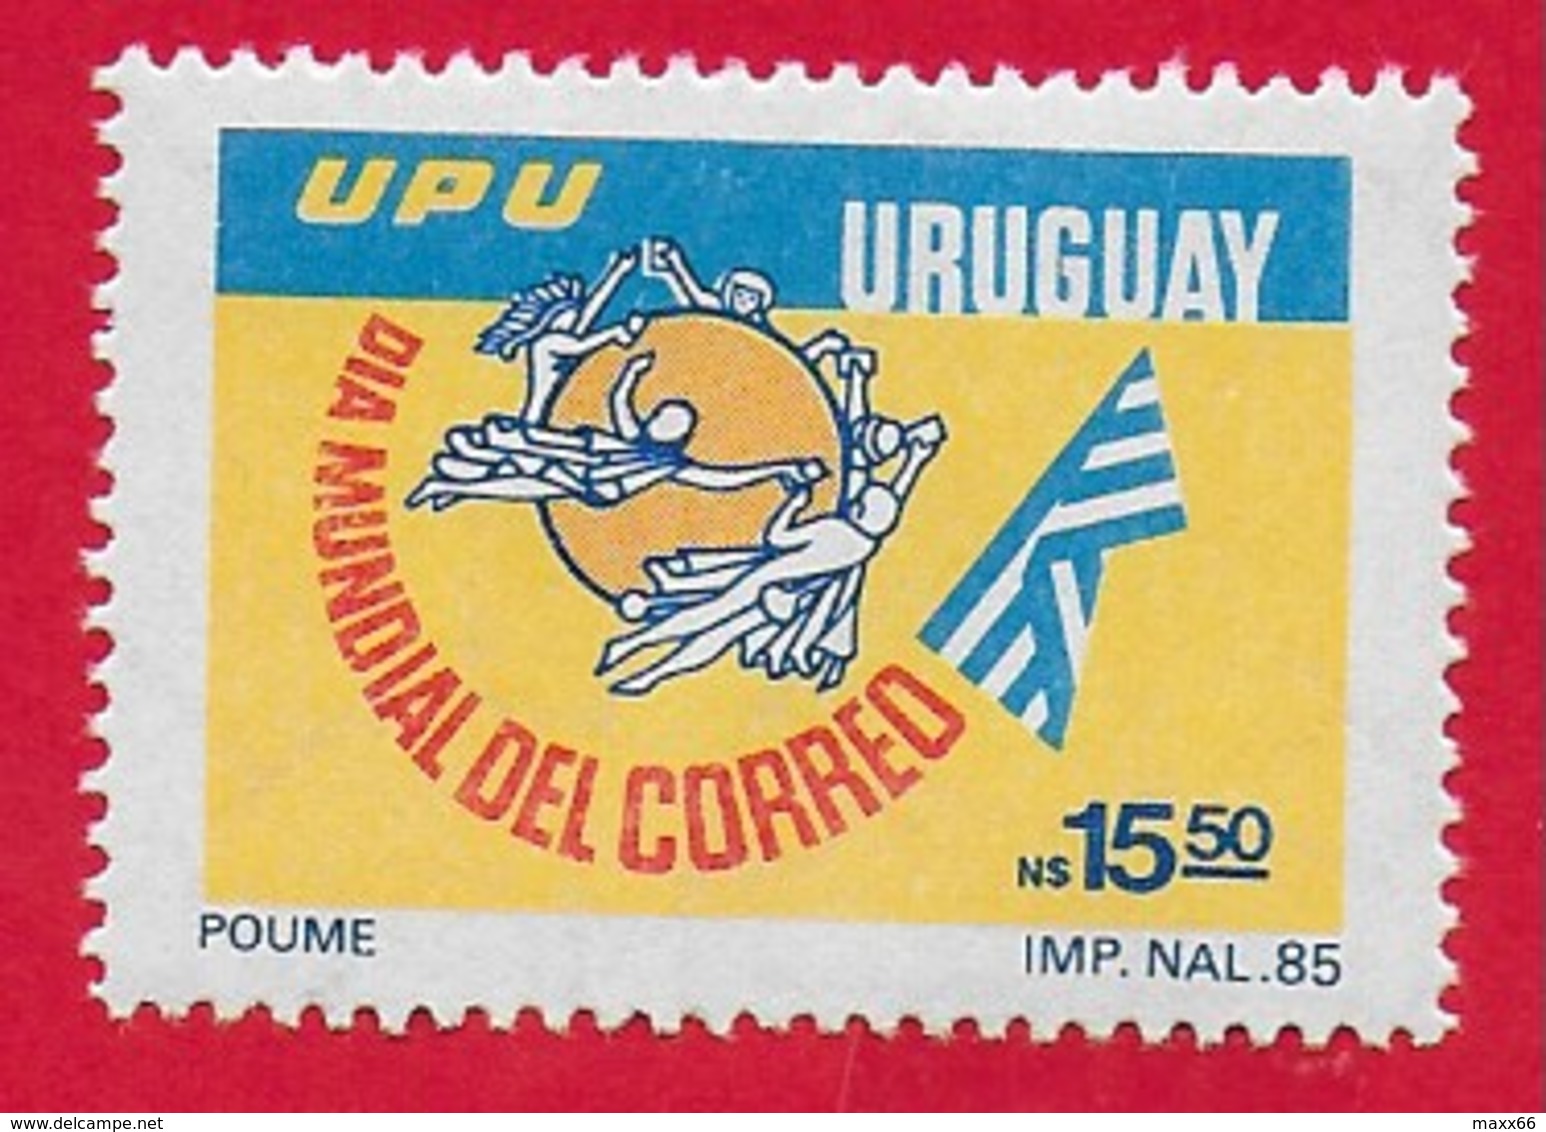 URUGUAY MNH - 1986  World Post Day - 15,50 N$ - Michel UY 1724 - Uruguay